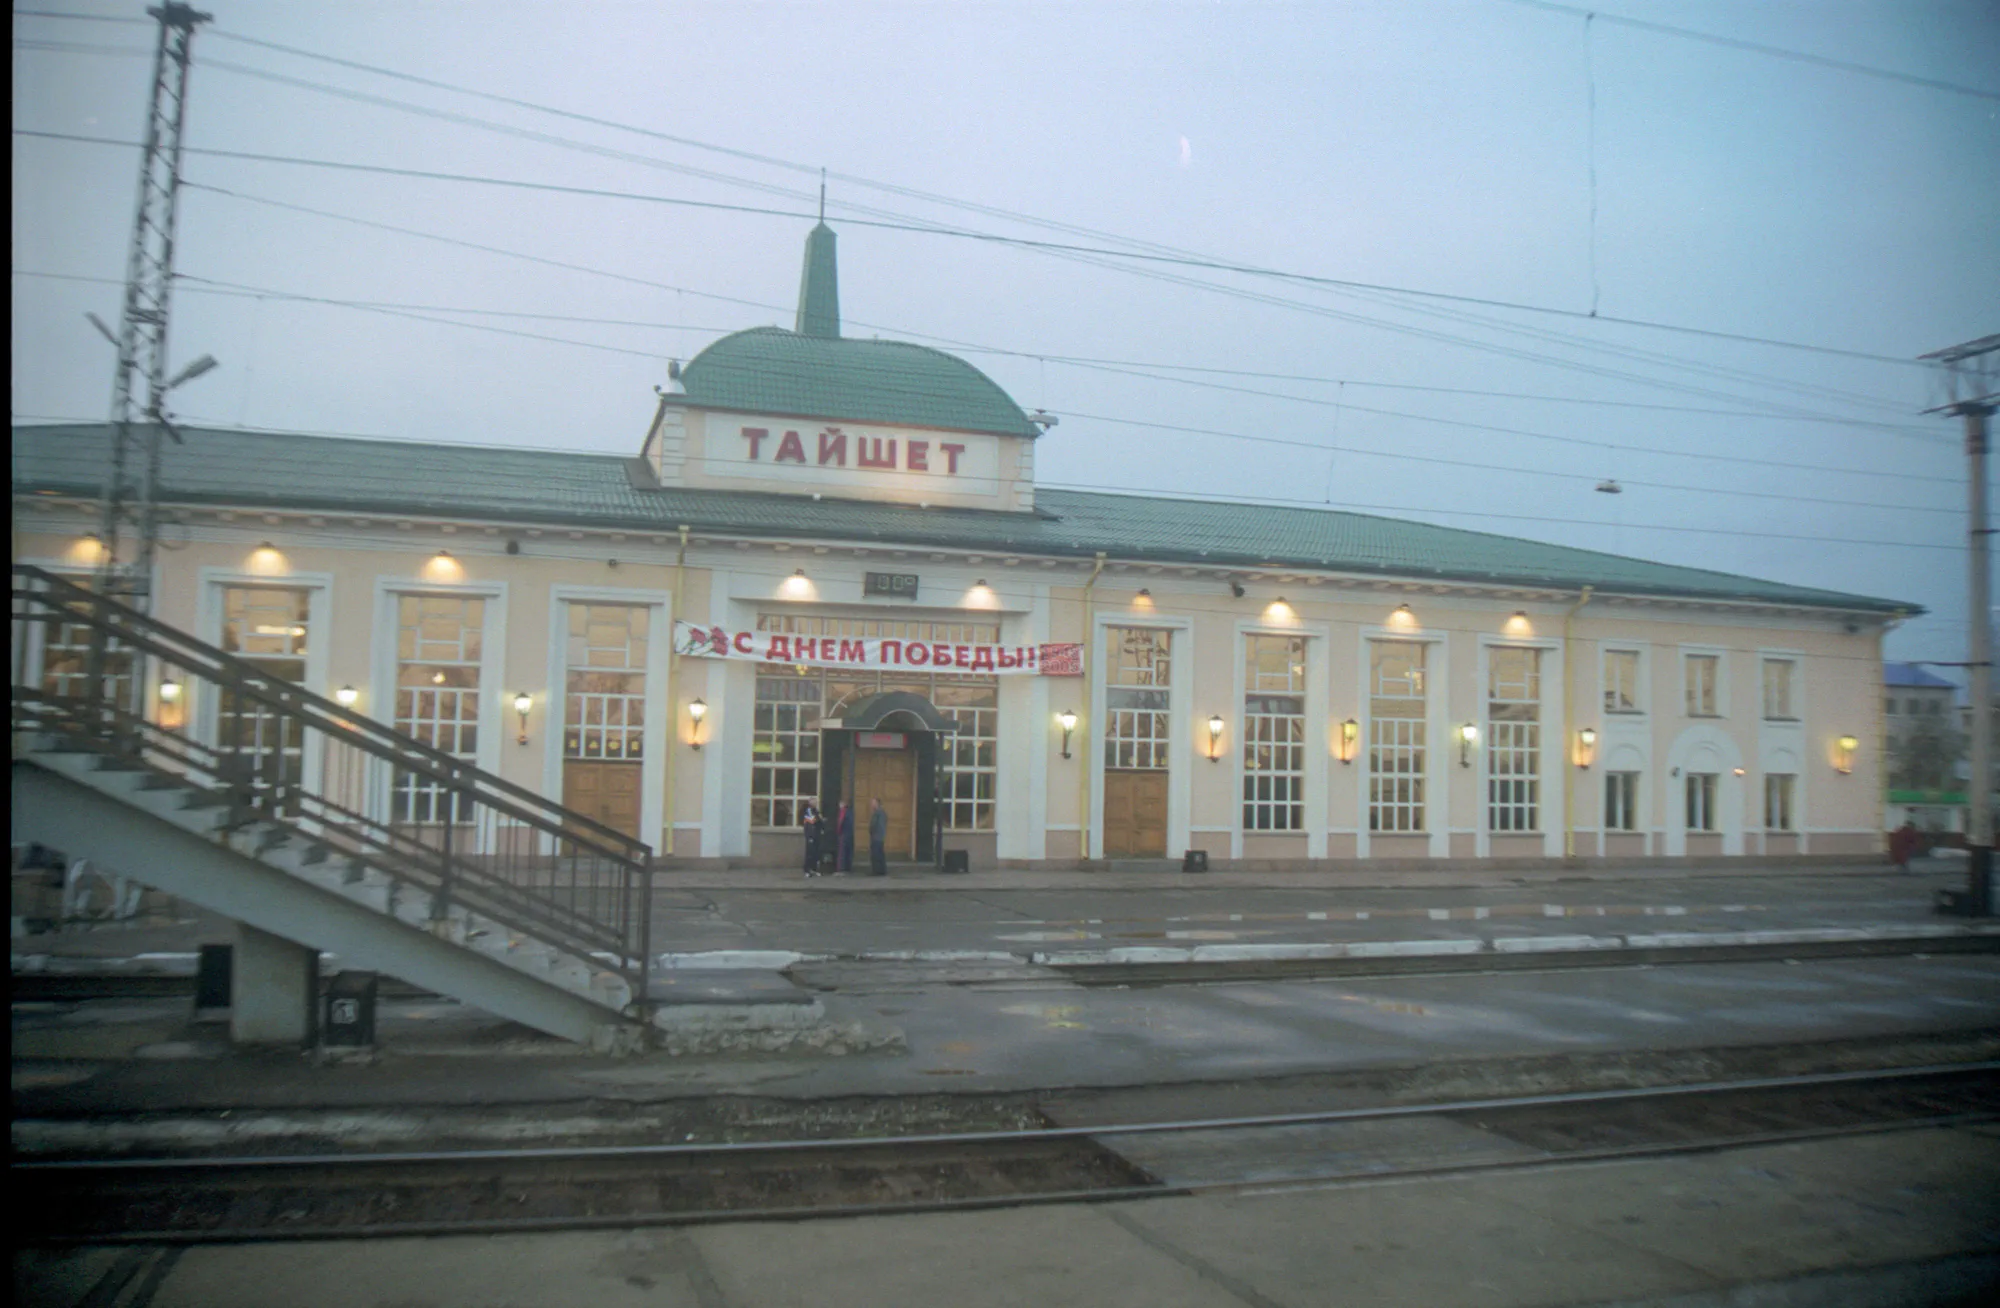 Tawshet Train Station